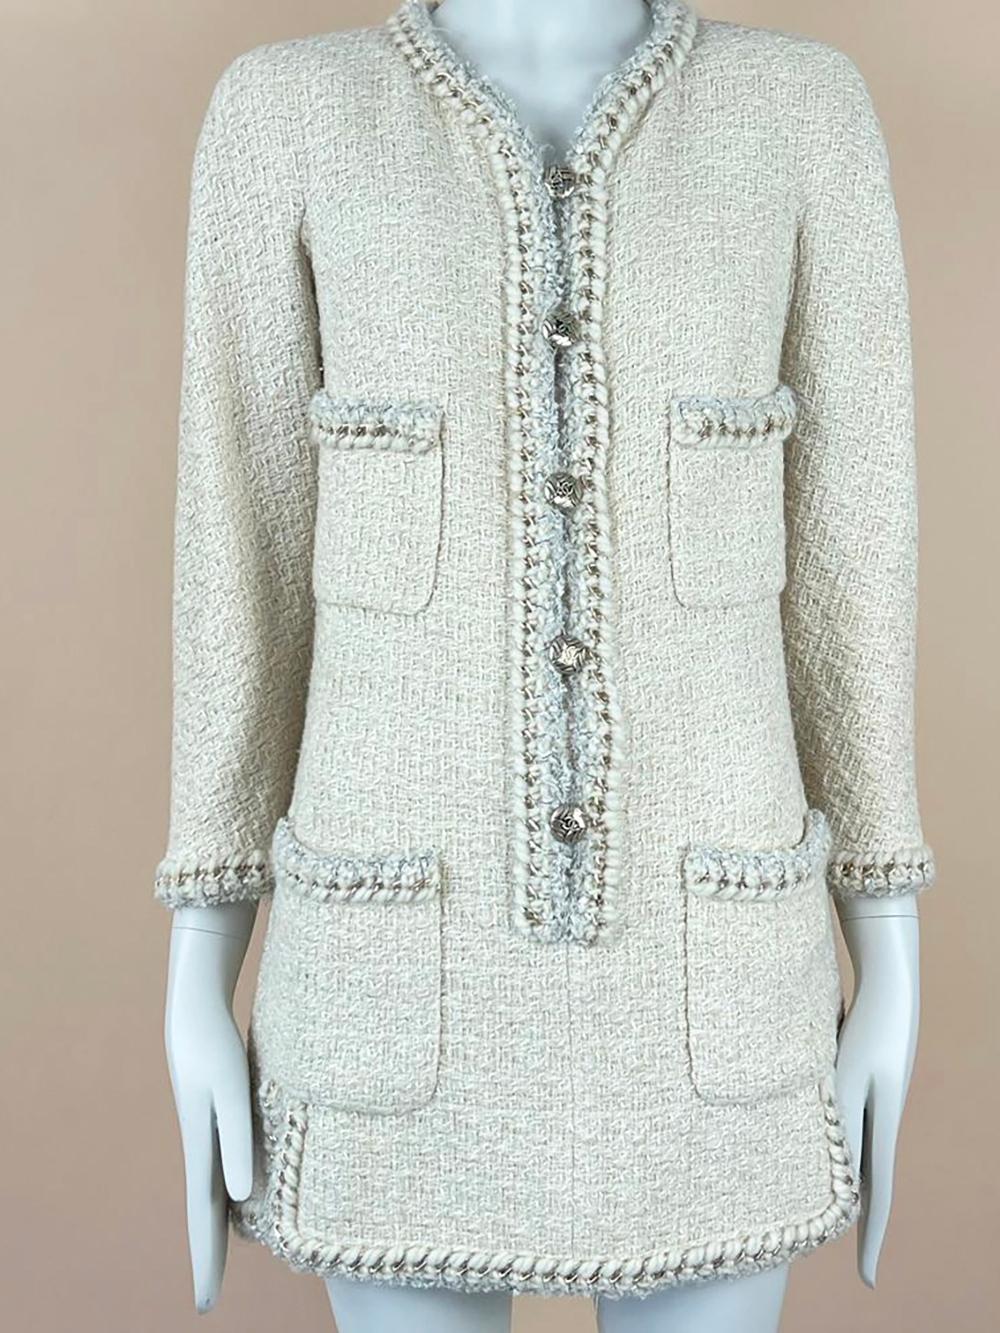 Chanel Iconic 4-Pockets Chain Trim Tweed Jacket Dress 5